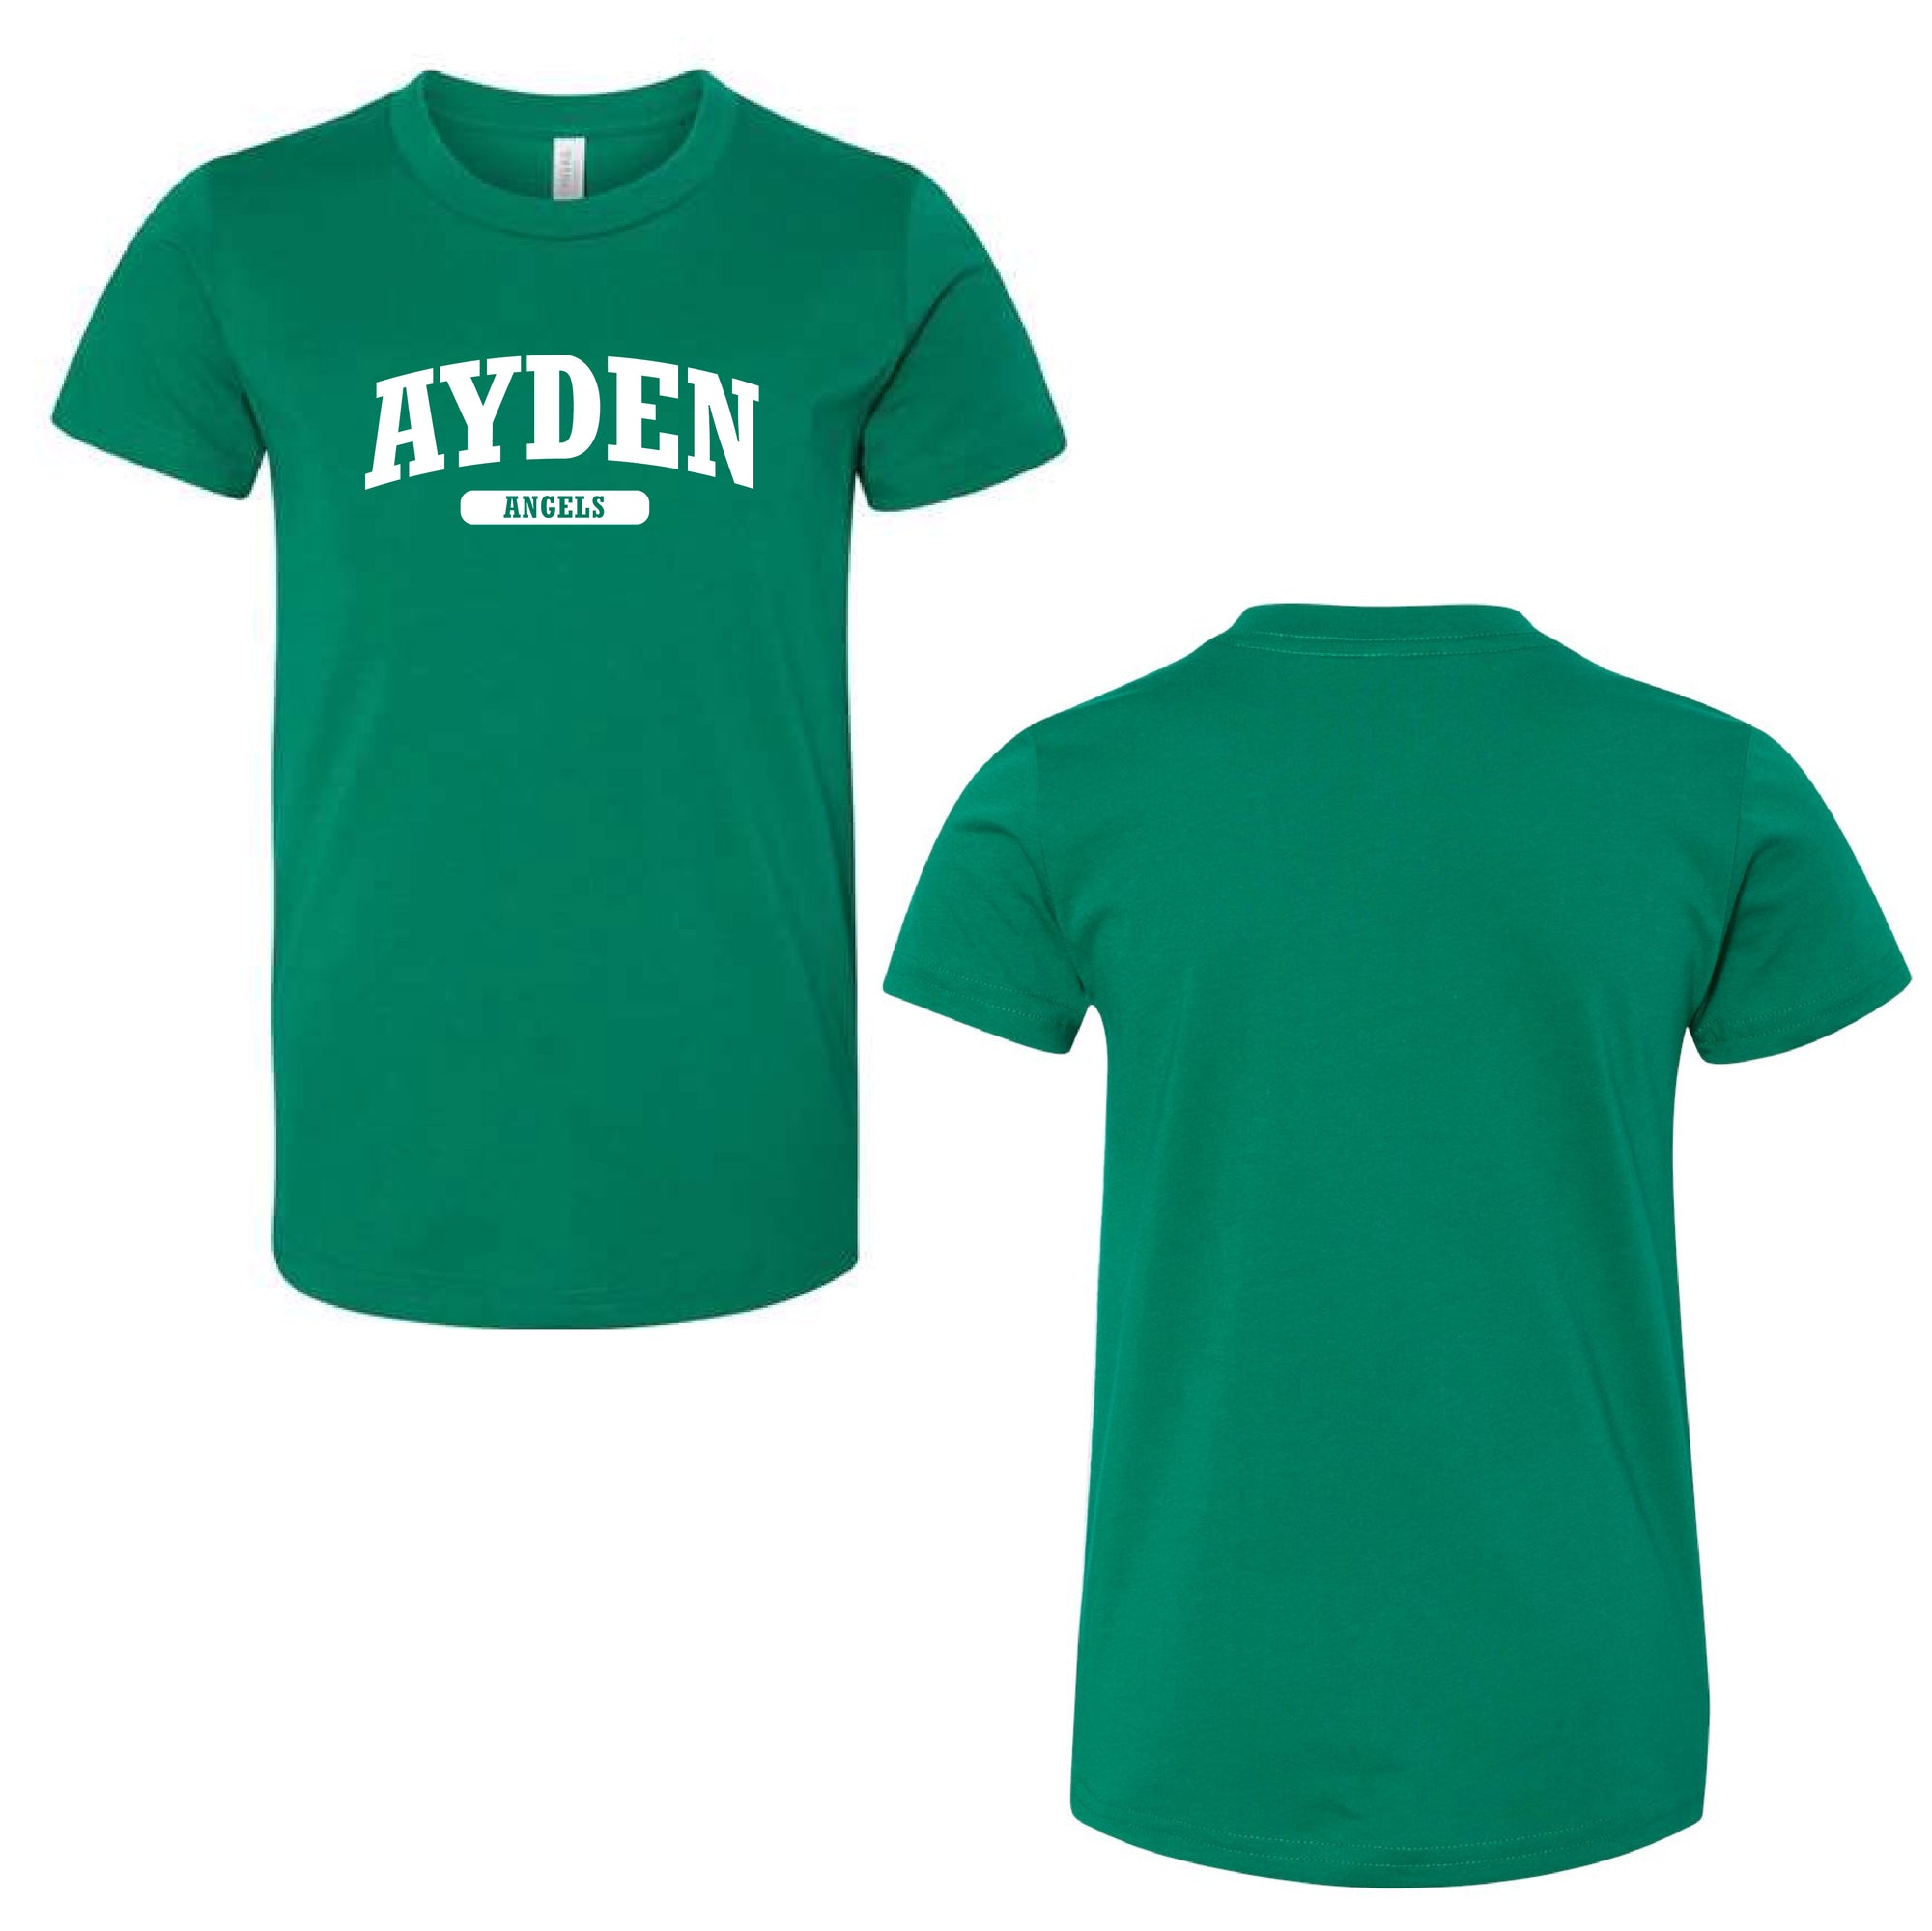 Ayden Angels Short Sleeve Shirt - Ayden Elementary